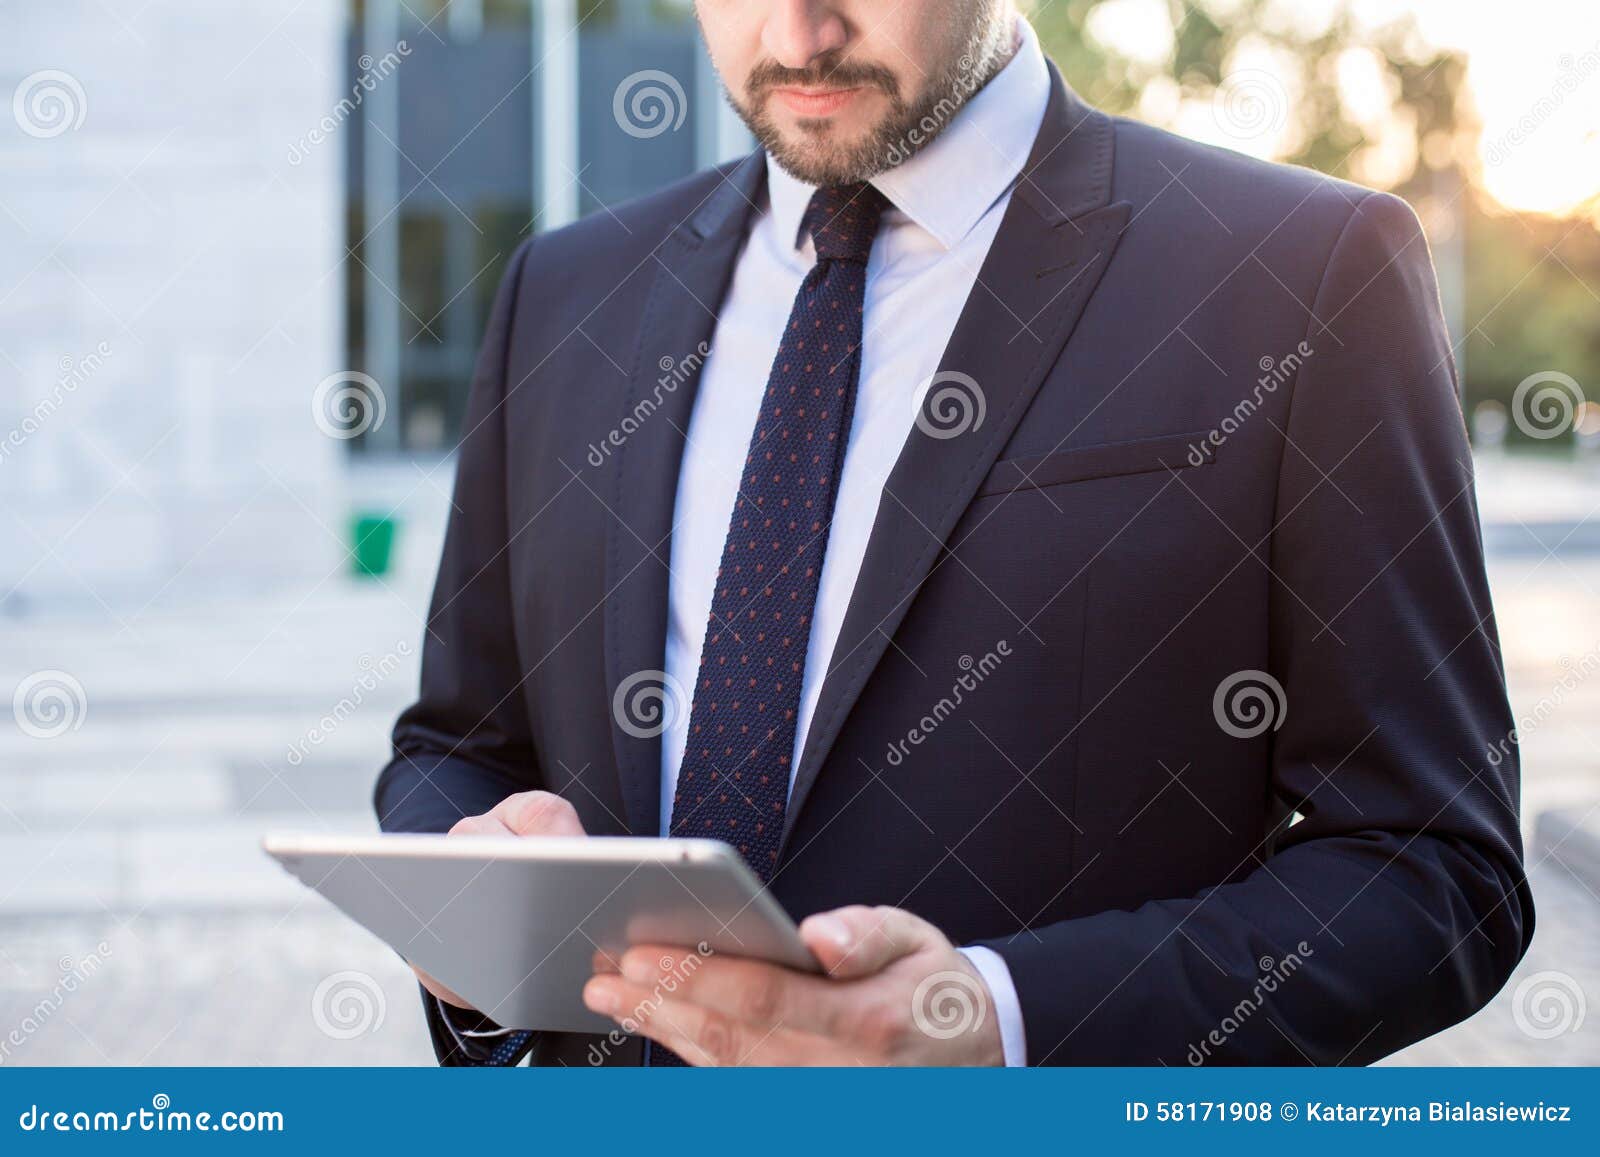 enterpreneur using laptop